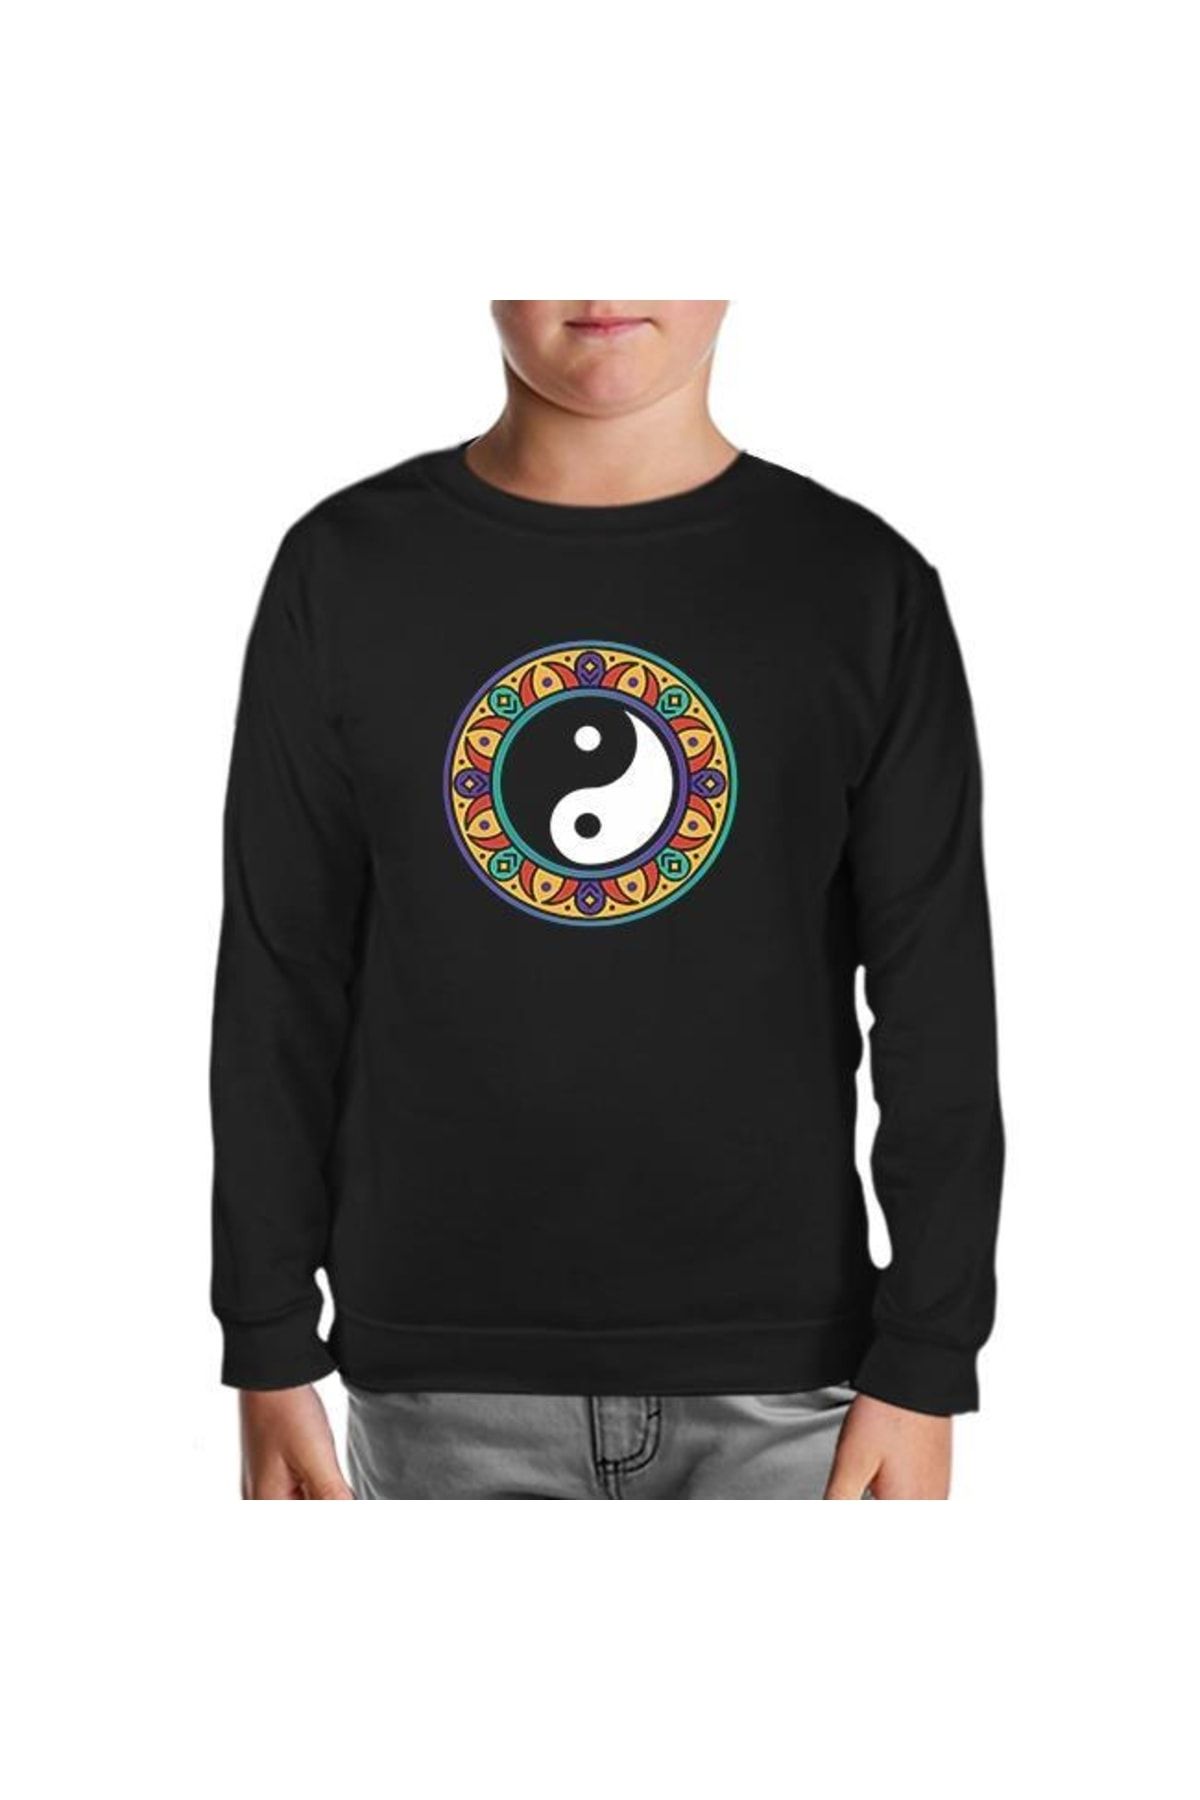 Lord T-Shirt Yin Yan Symbol In The Middle Of Mandala Design Siyah Çocuk Sweatshirt